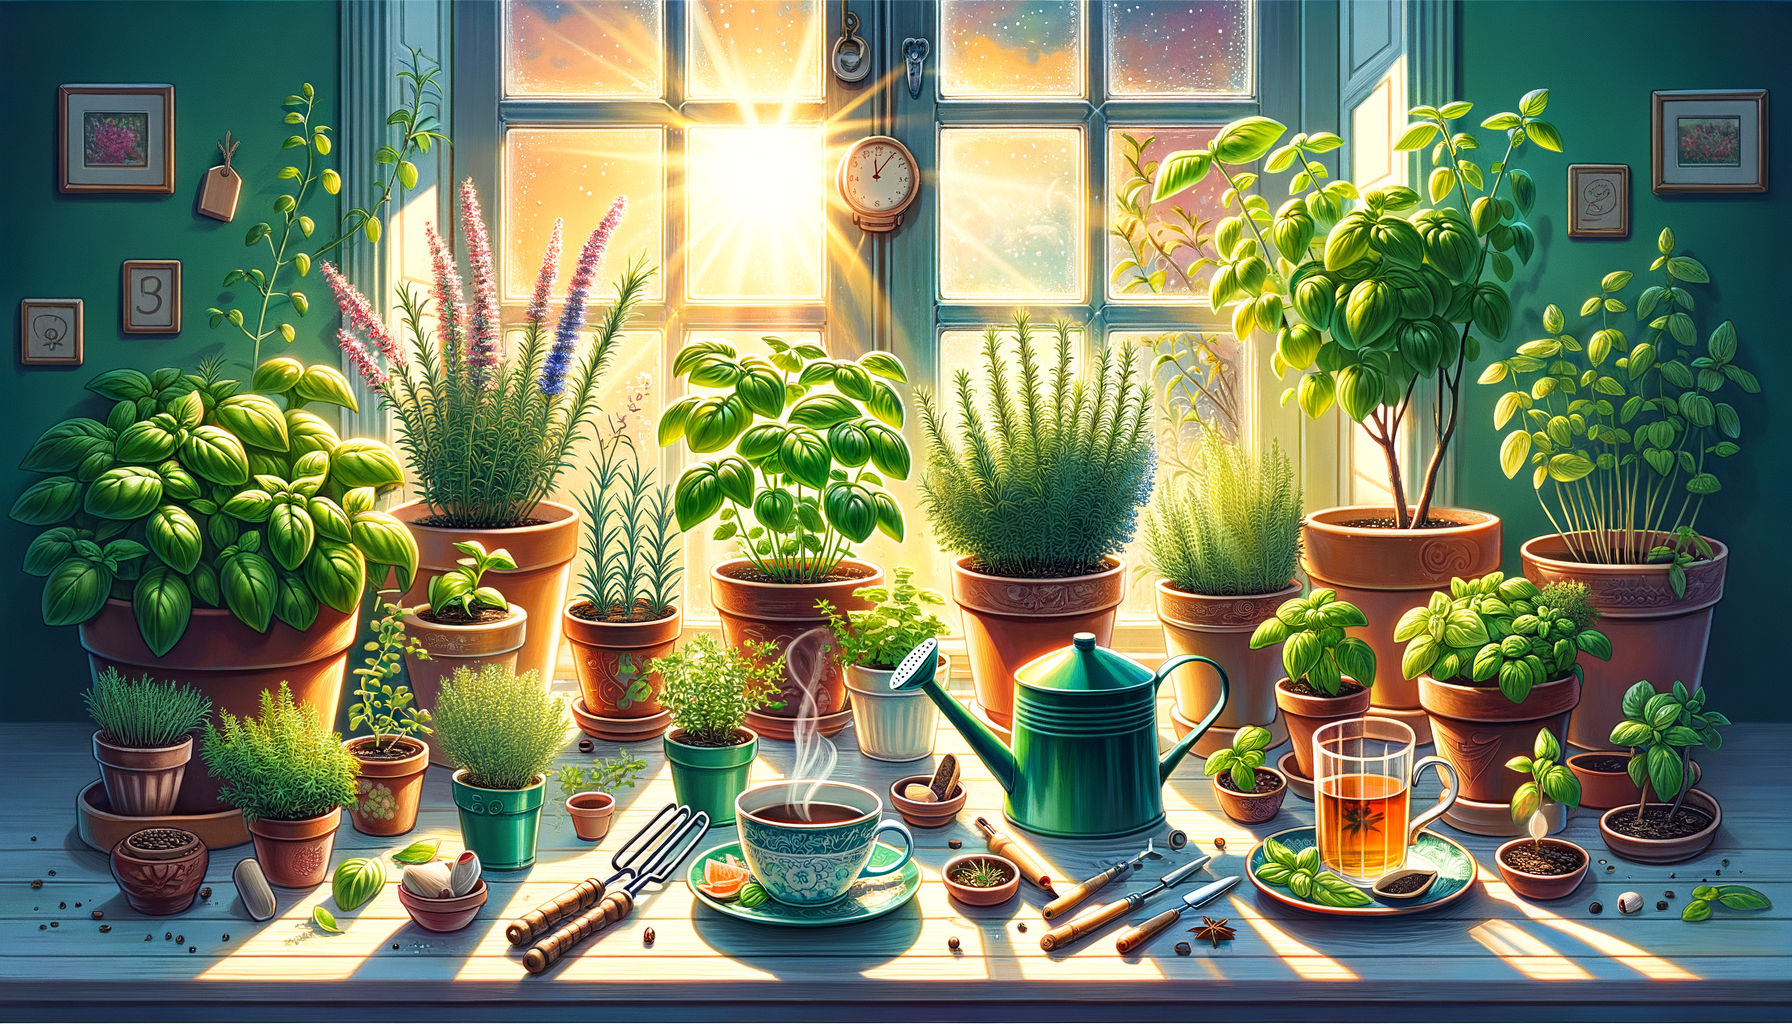 Sunlit windowsill with an assortment of vibrant indoor herbs